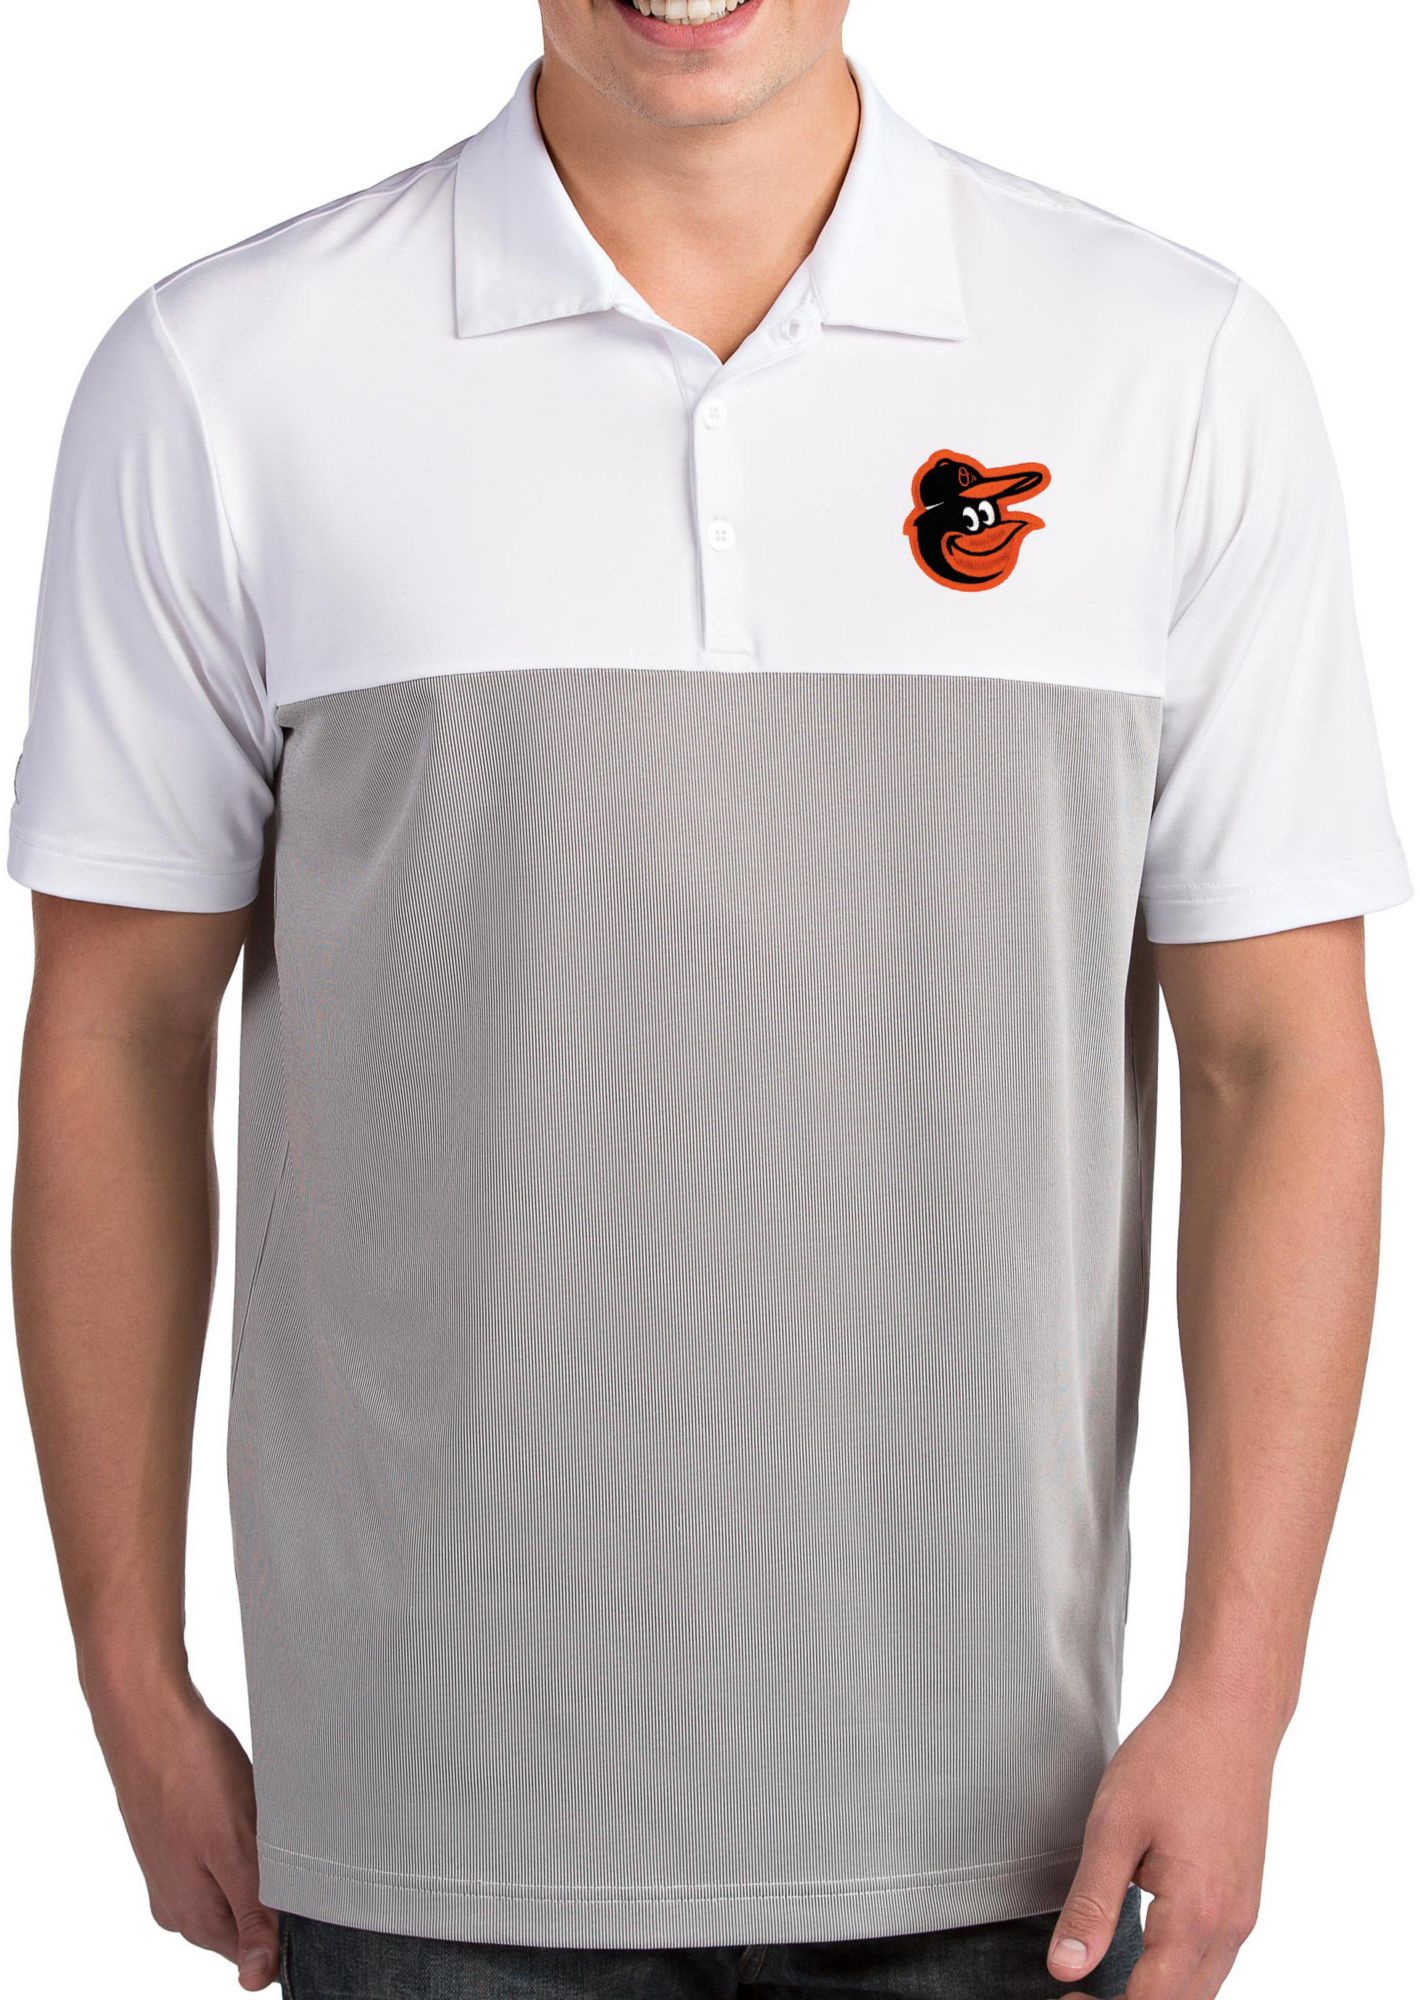 baltimore orioles golf shirt